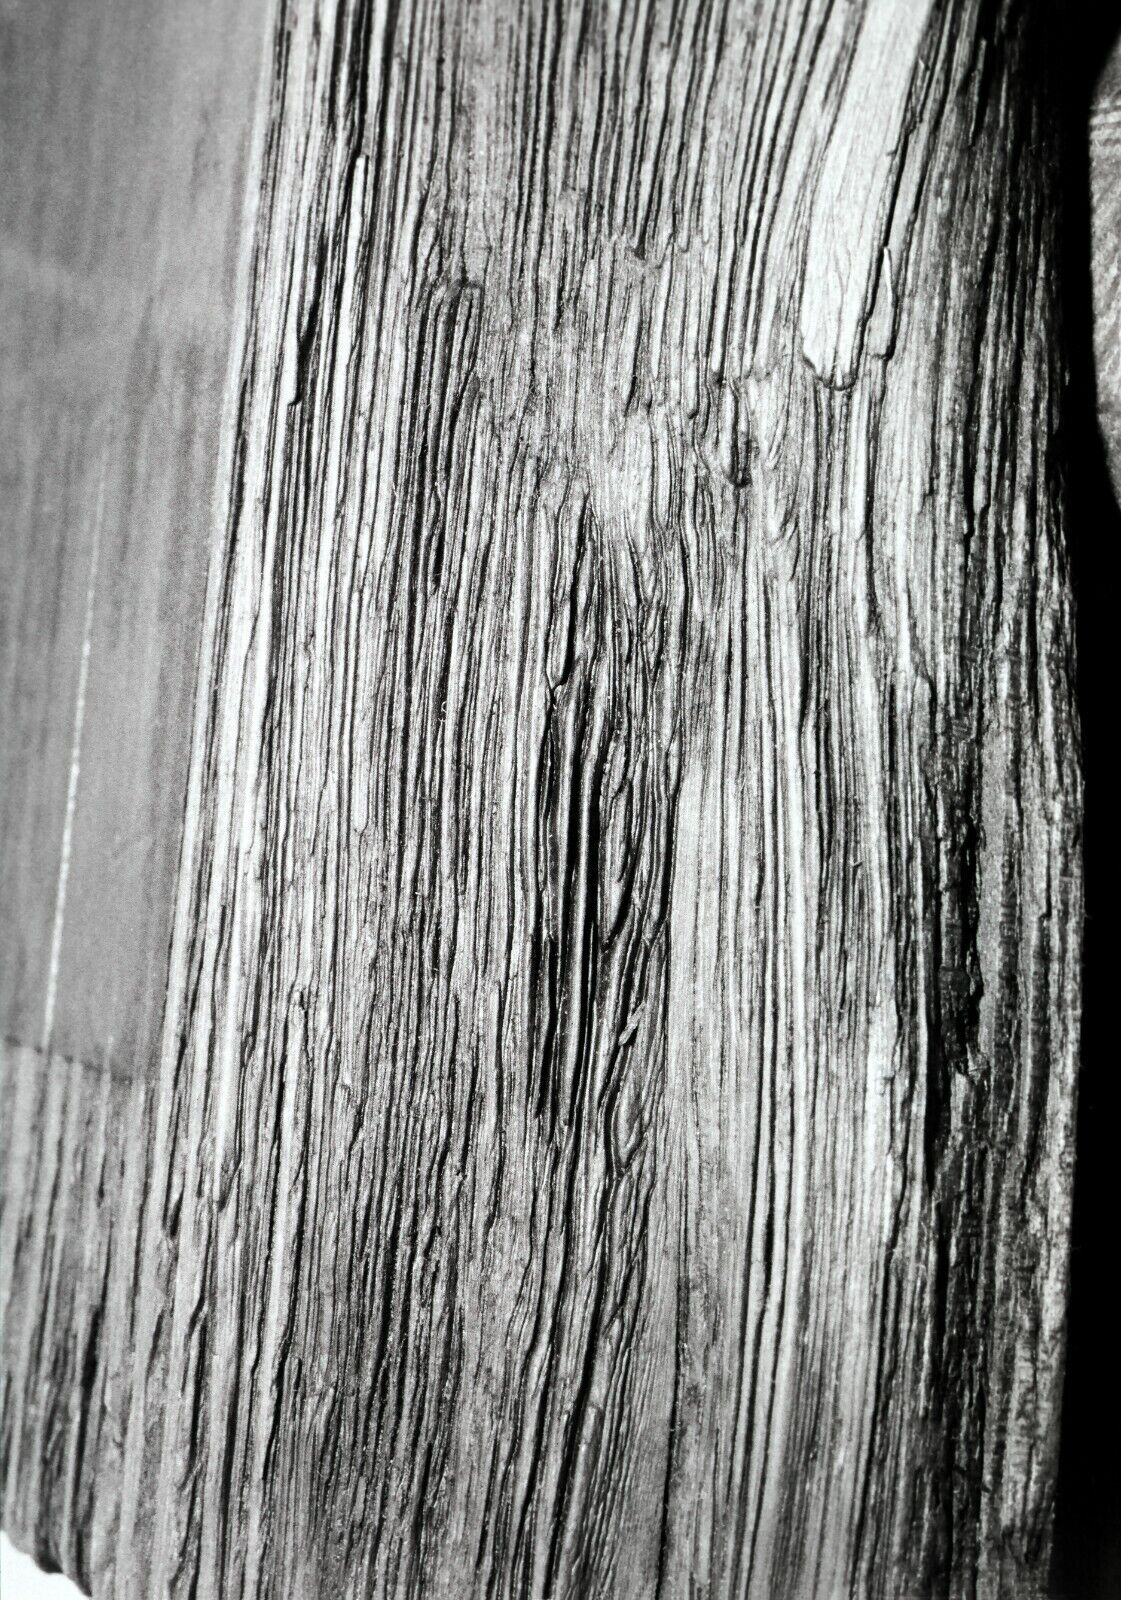 Wood Grain Closeup Two Original 35 mm Monochrome (B&W) Negatives